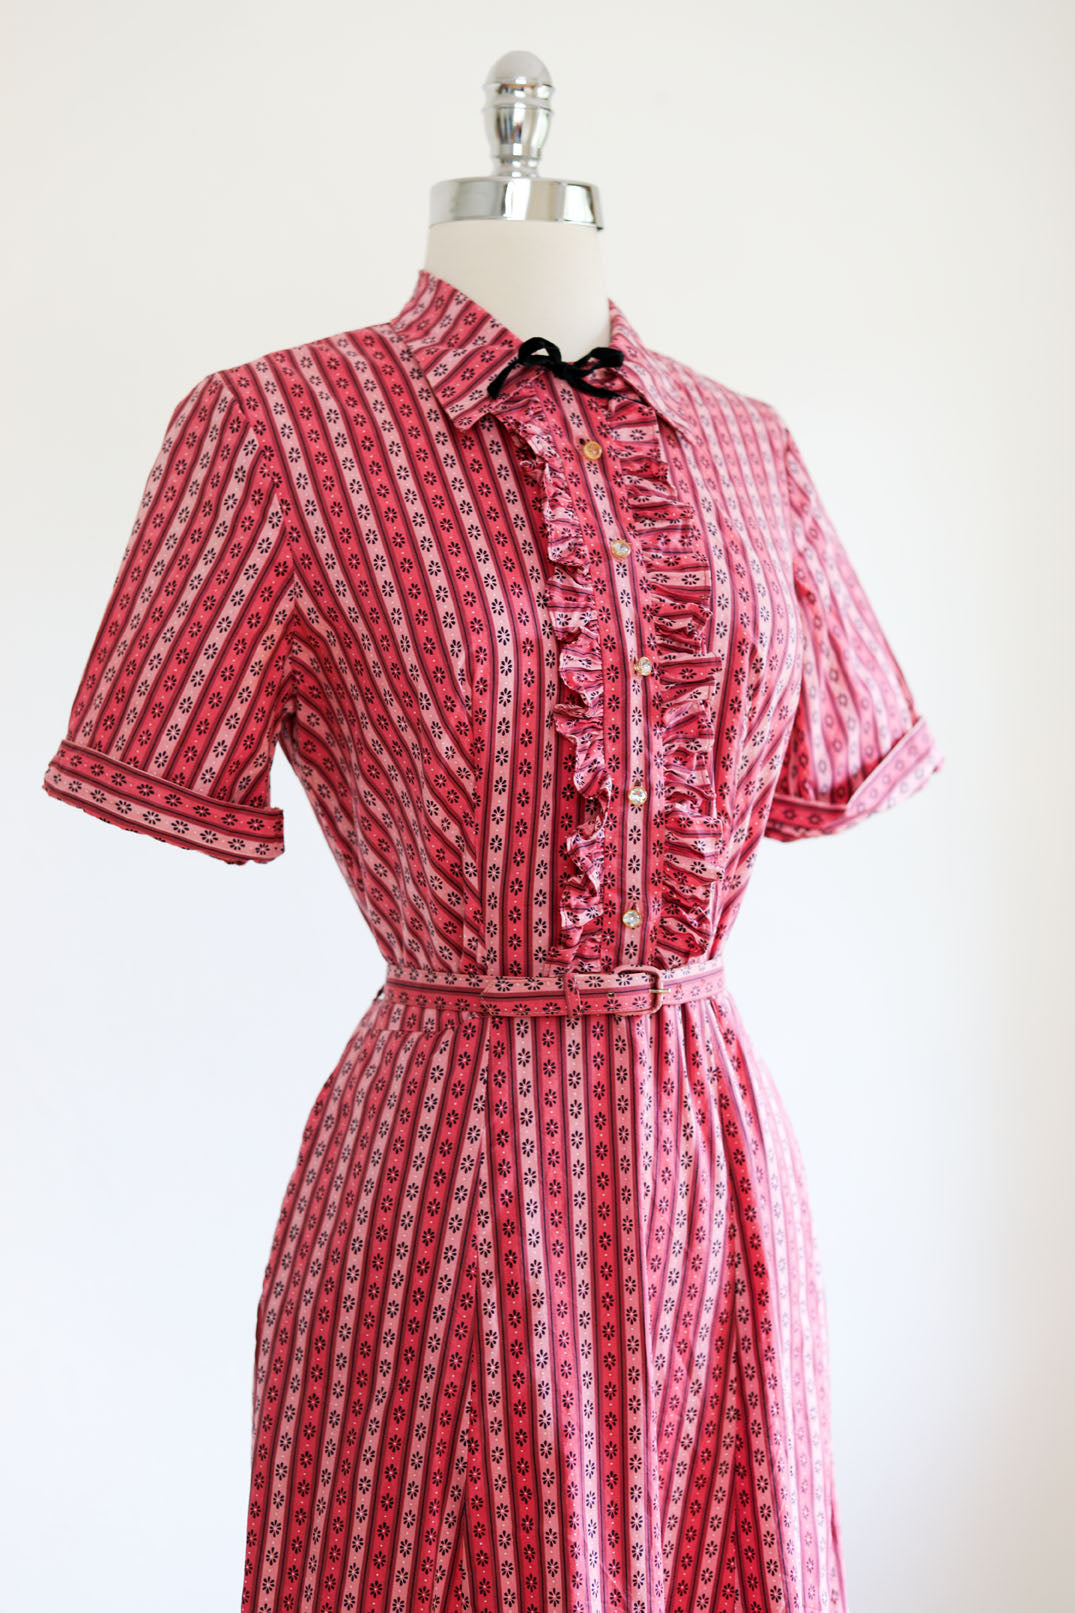 Vintage 1940s to 1950s Dress - TUXEDO DETAILS Candy Pink Black Floral w Jabot + Velvet Bow Cotton Shirtwaist Size M